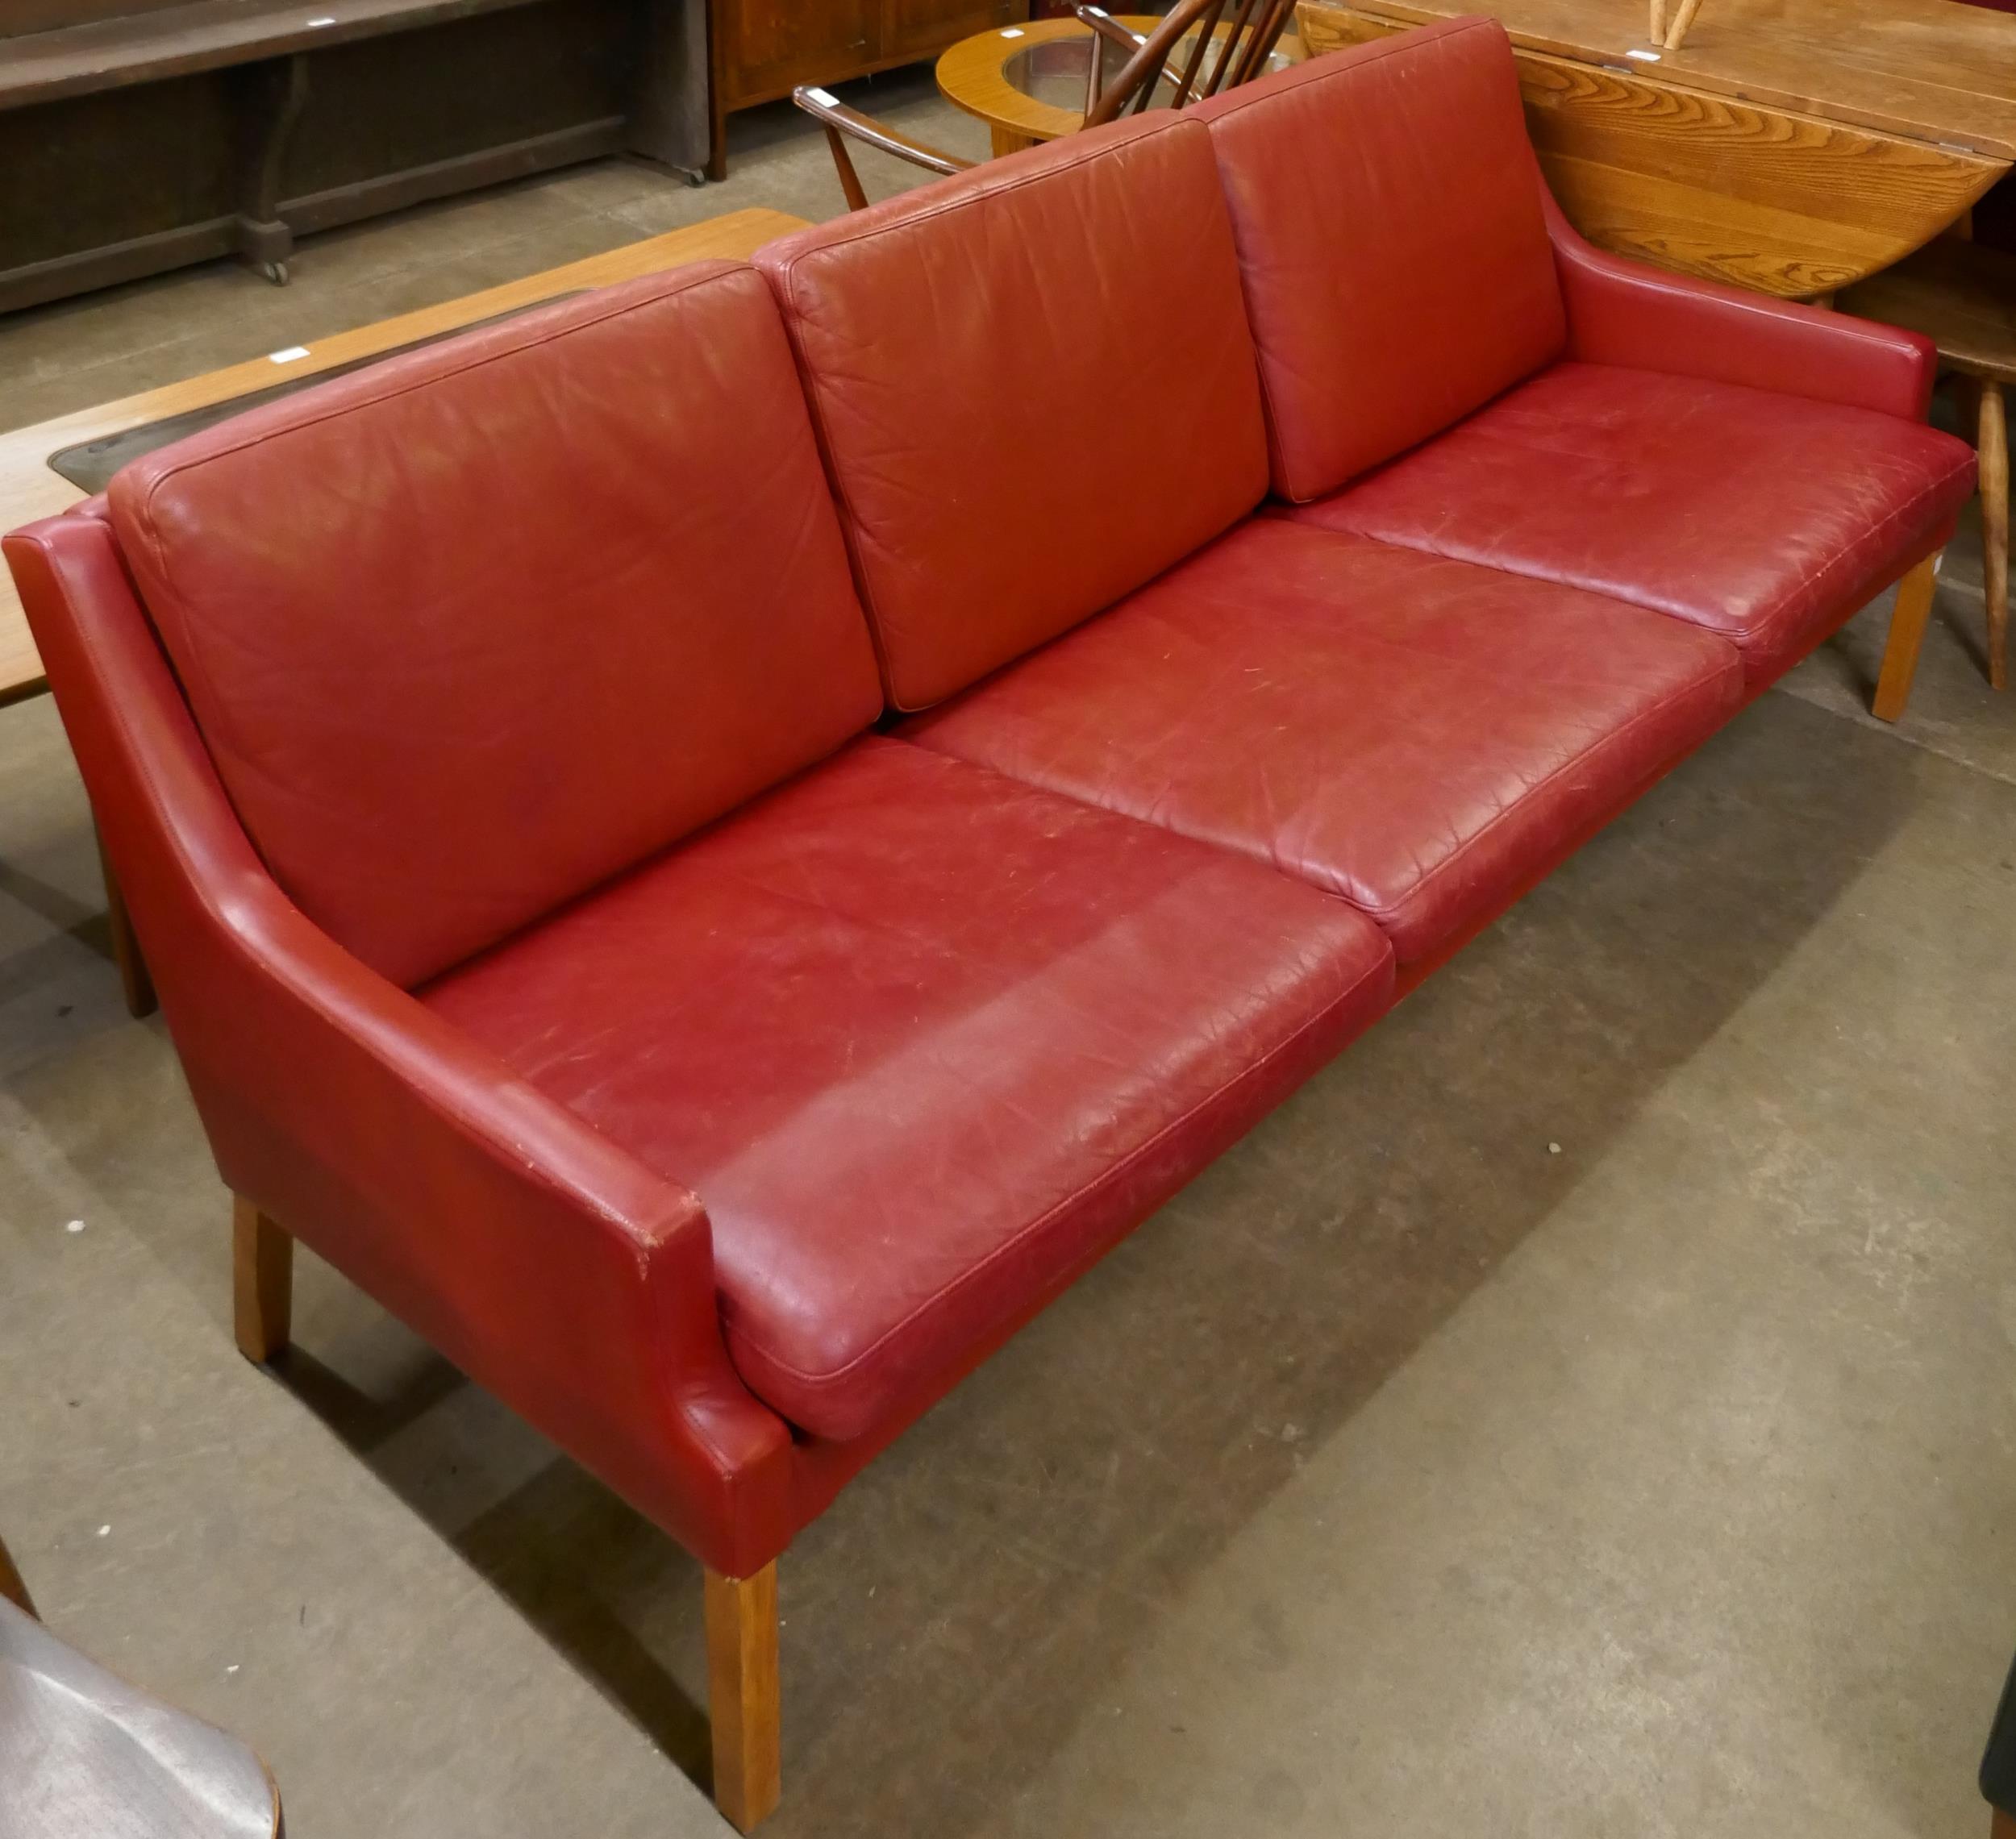 A Danish Thams Kvalitet crimson leather three seater sofa, designed by Rud Thygesen - Image 2 of 2